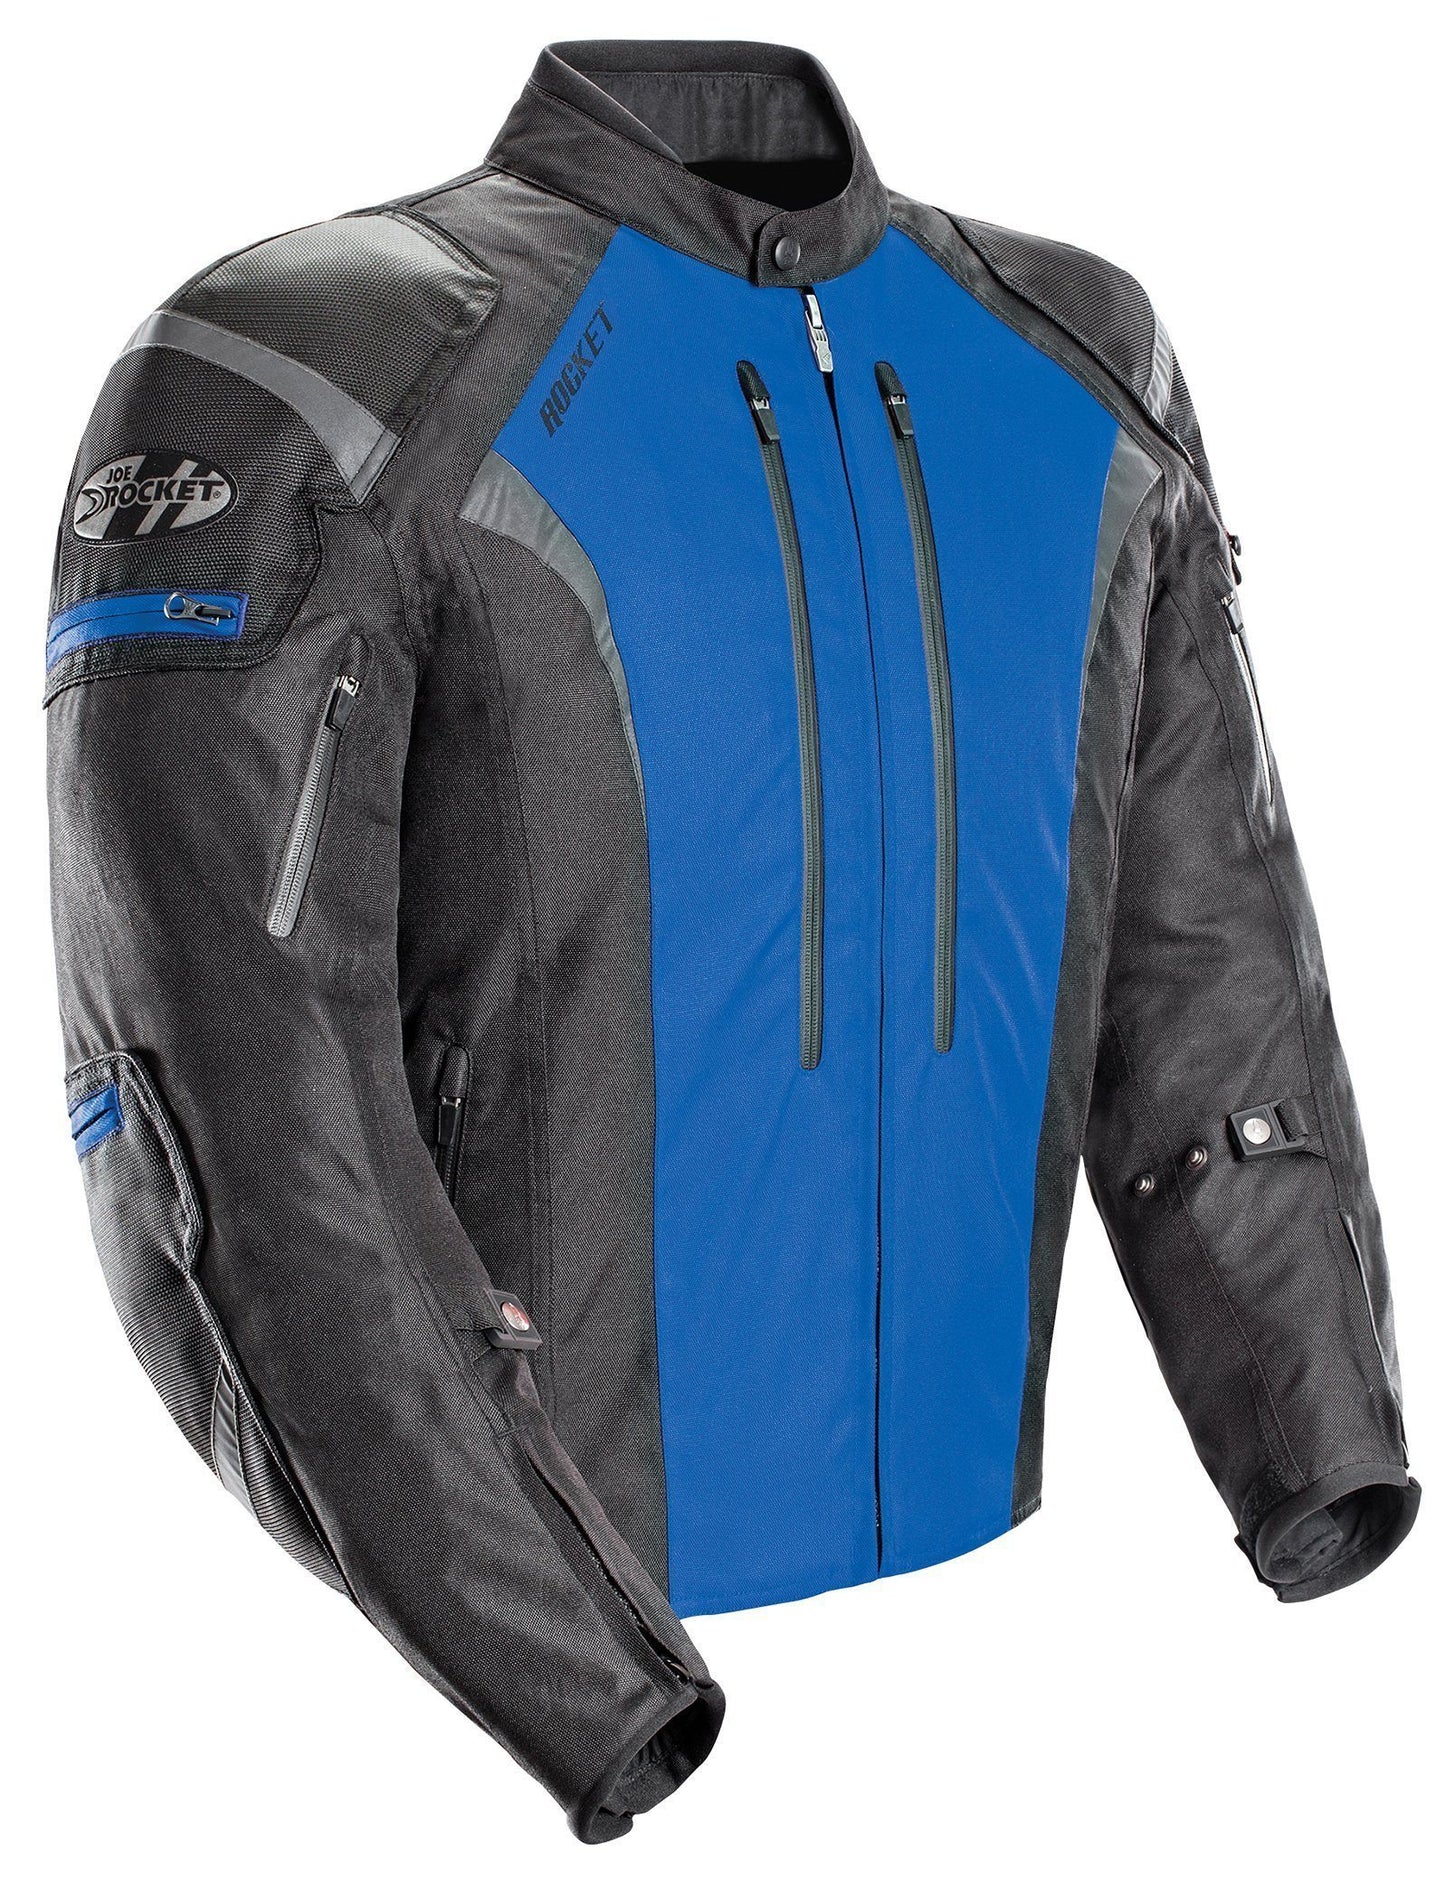 Joe Rocket Atomic 5.0 Men's Black And Blue Textile Jacket